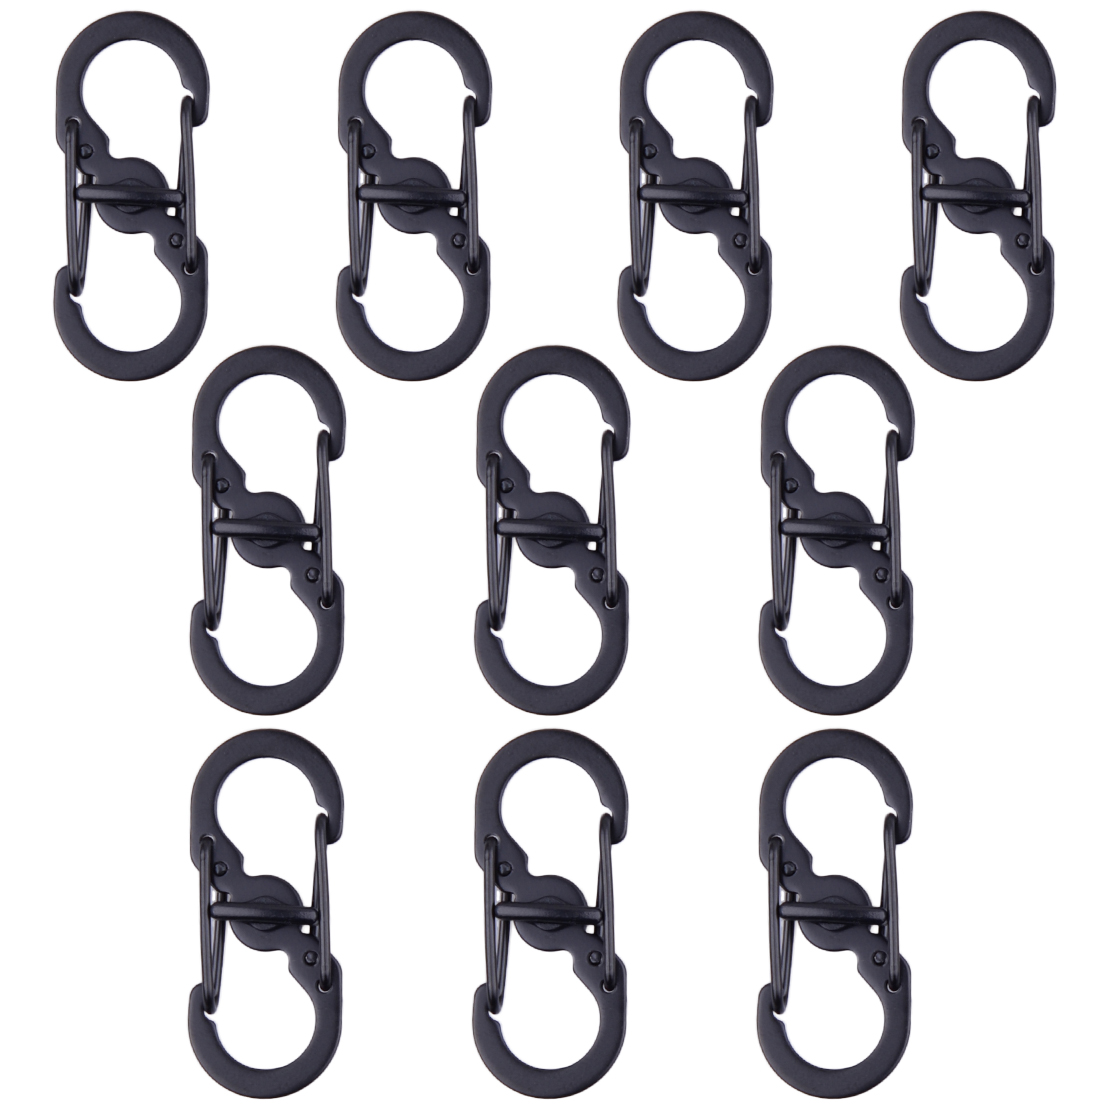 Details about   10X Metal S Shape 8 Type Carabiner Key Chain Hook Clip Buckle Slidelock Outdoor 